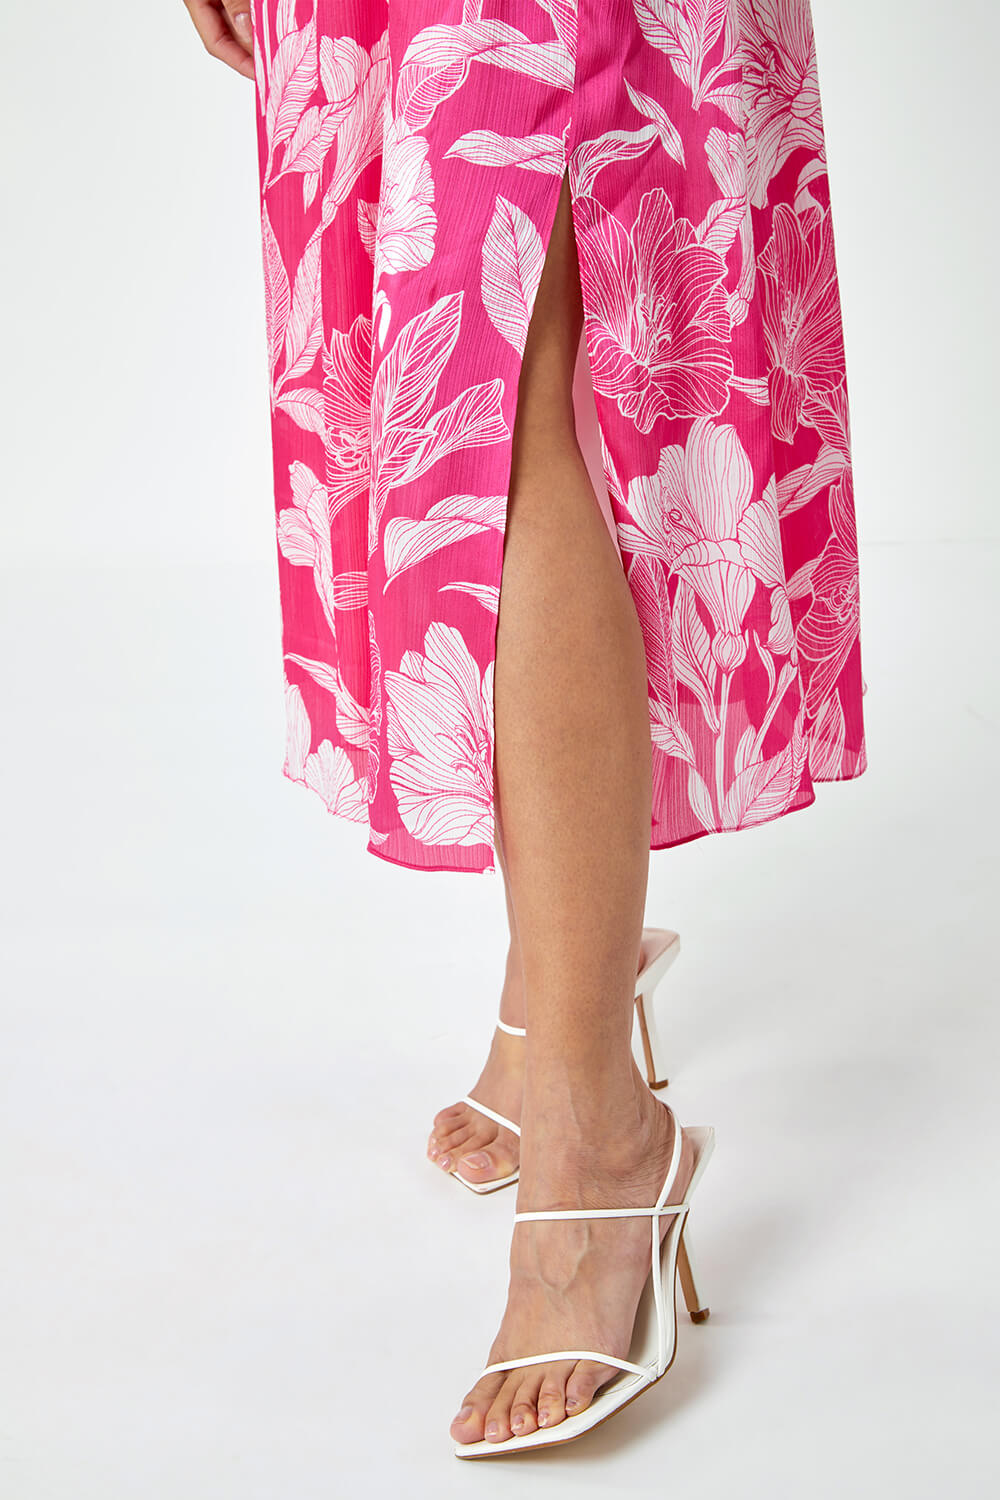 PINK Floral Print Twist Front Midi Dress, Image 5 of 5